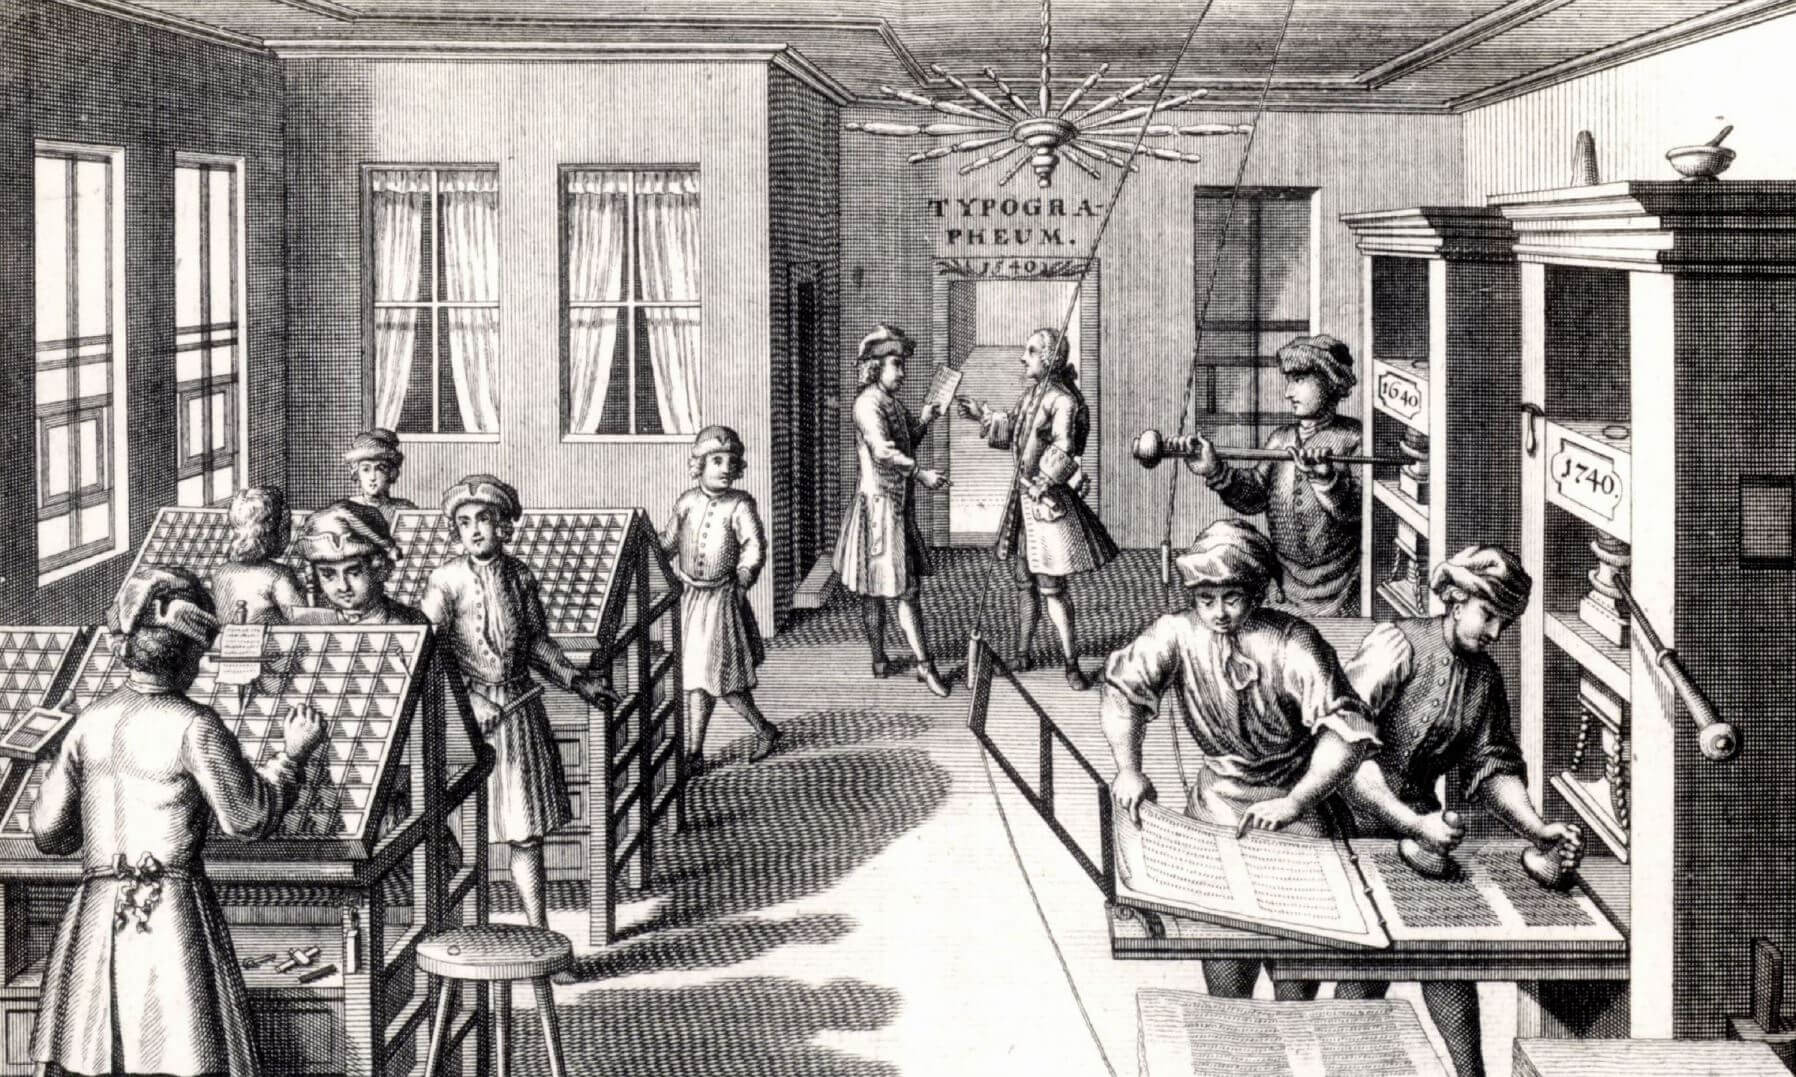 Workers in 18th century printing workshop